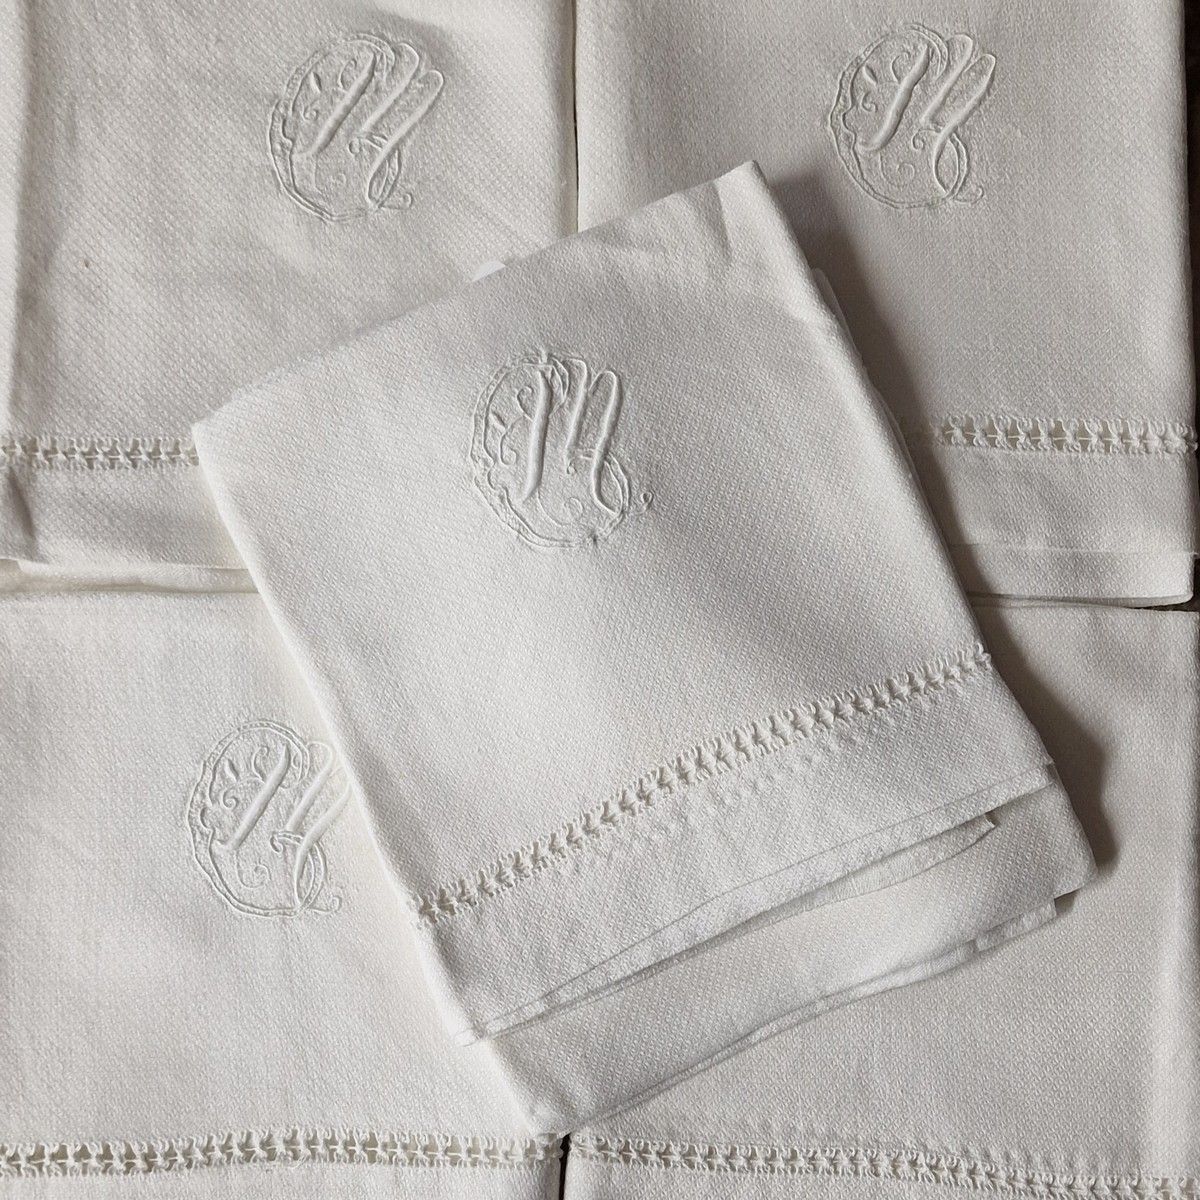 Null 一套 6 件的马桶布 约 1900 年，白色棉织锦缎，饰有条纹，用波顿针法绣有 GM 字母，边缘有日期标记
100 x 66 厘米
TBE（按原样出售&hellip;